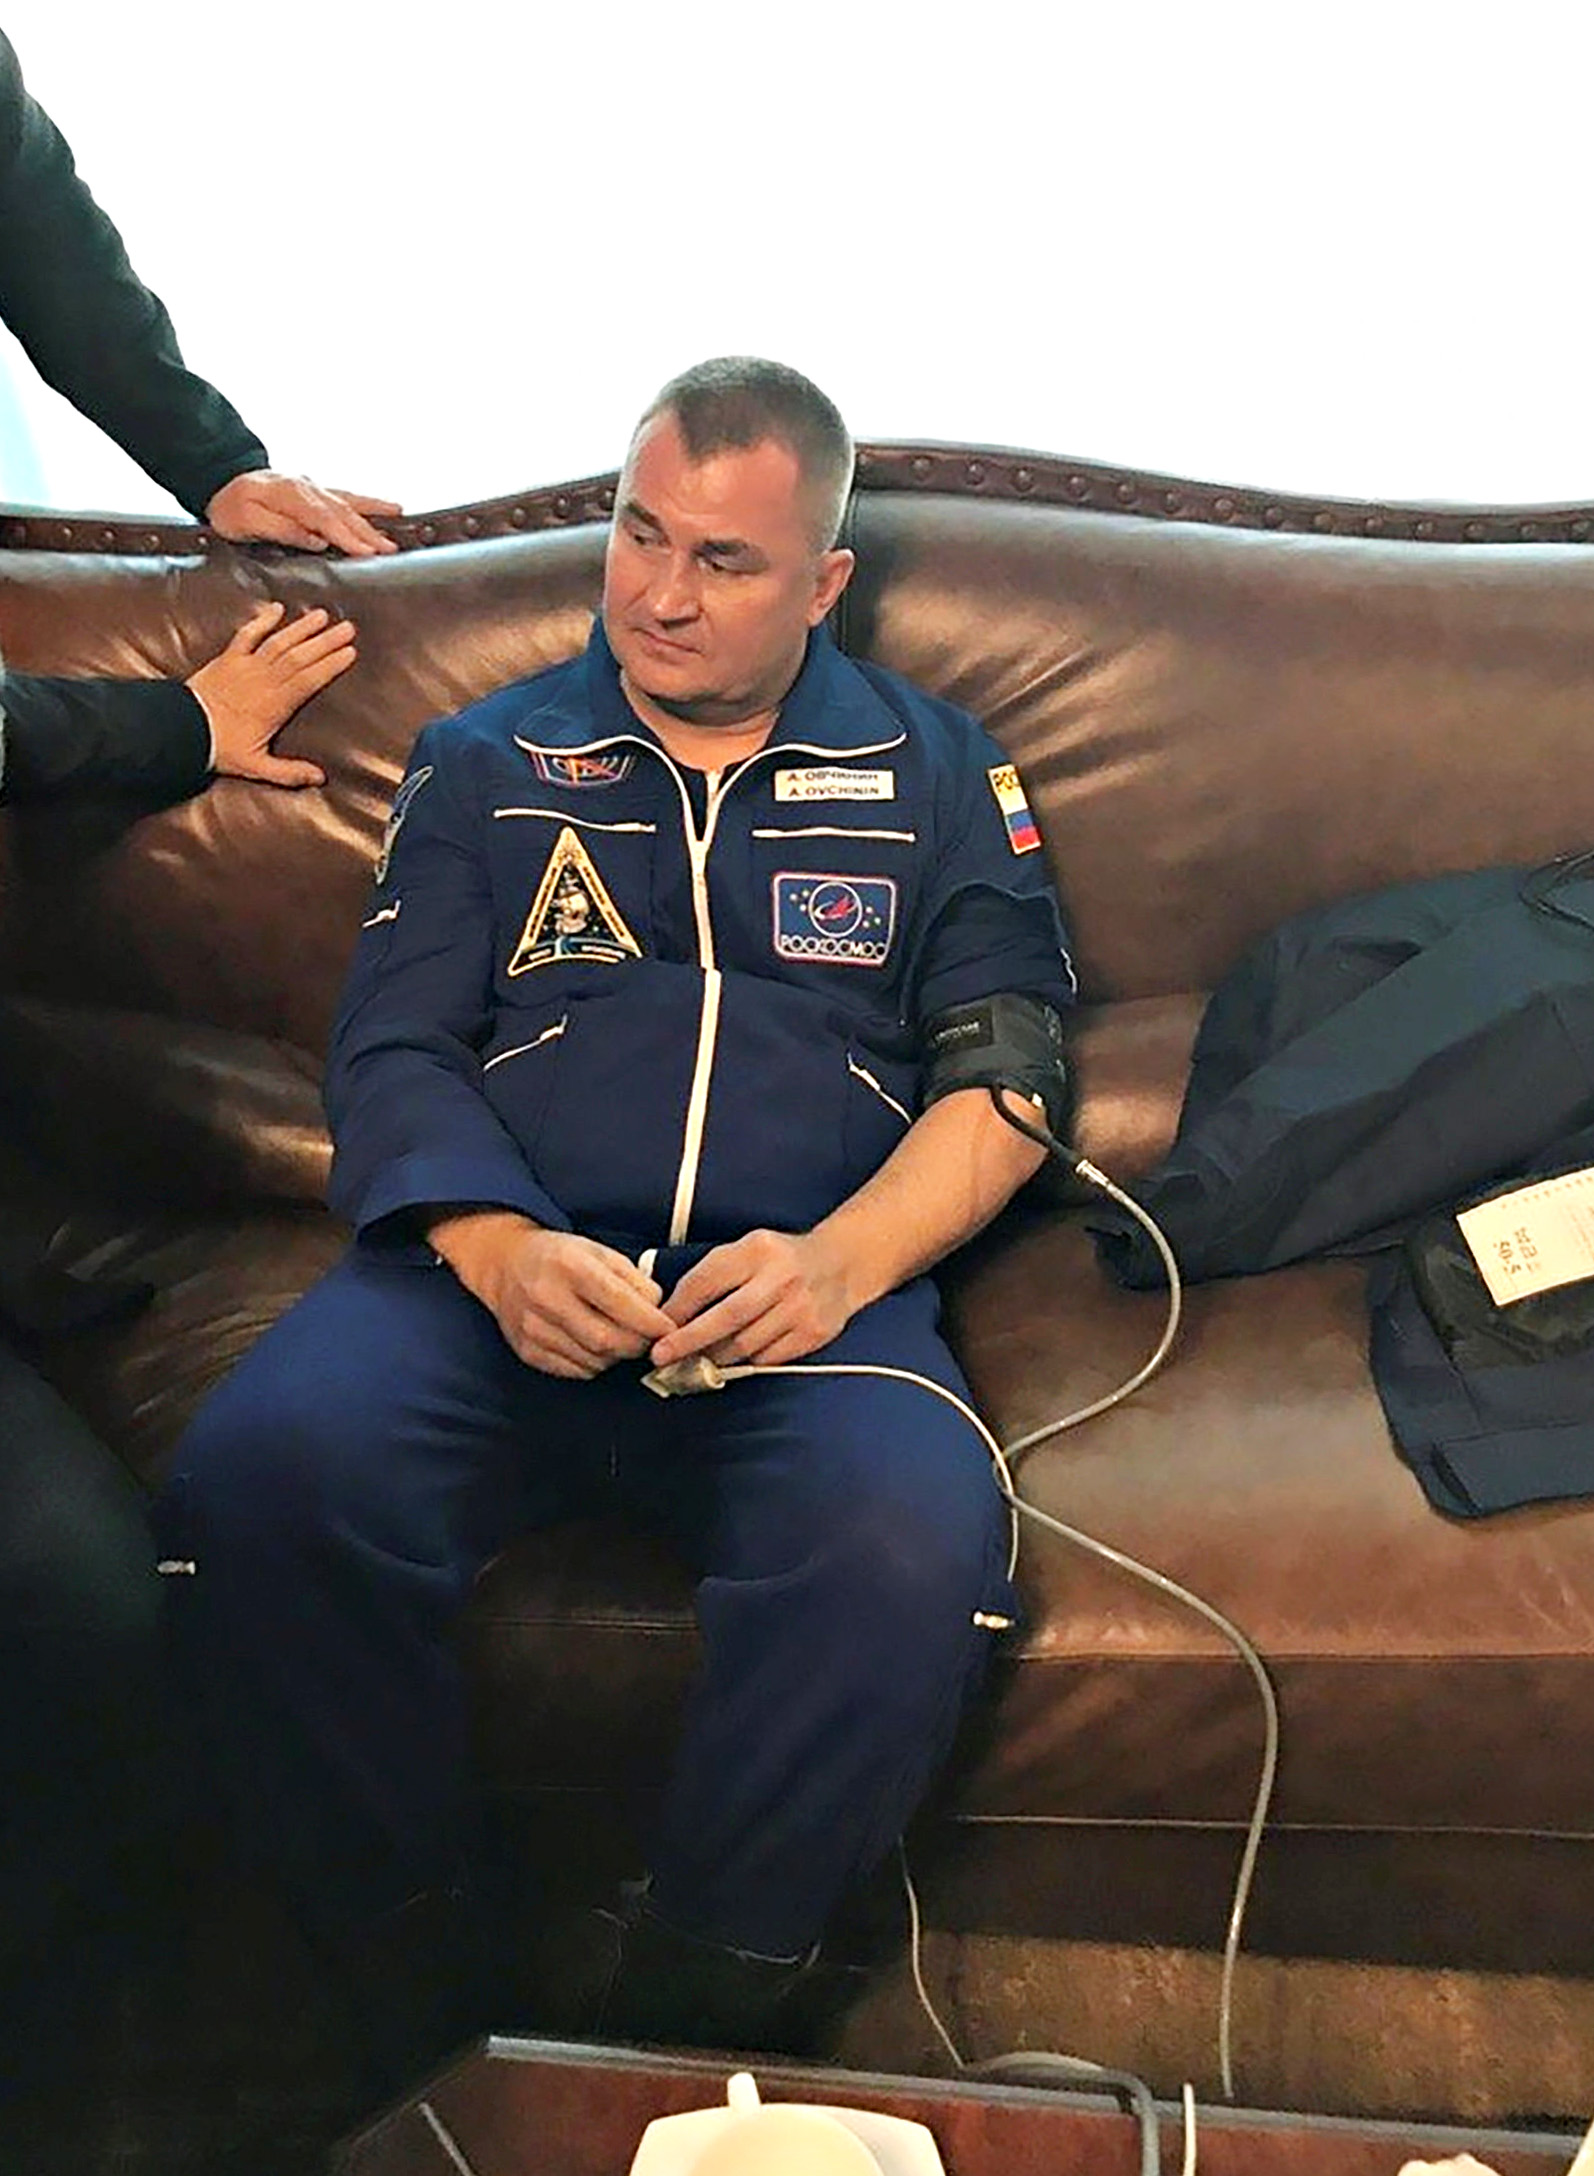 PHOTO: Russian cosmonaut Alexey Ovchinin undergoes medical tests after a Soyuz spacecraft made an emergency landing following a failure of its booster rockets, in Zhezkazgan, Kazakhstan on Oct. 11, 2018. 